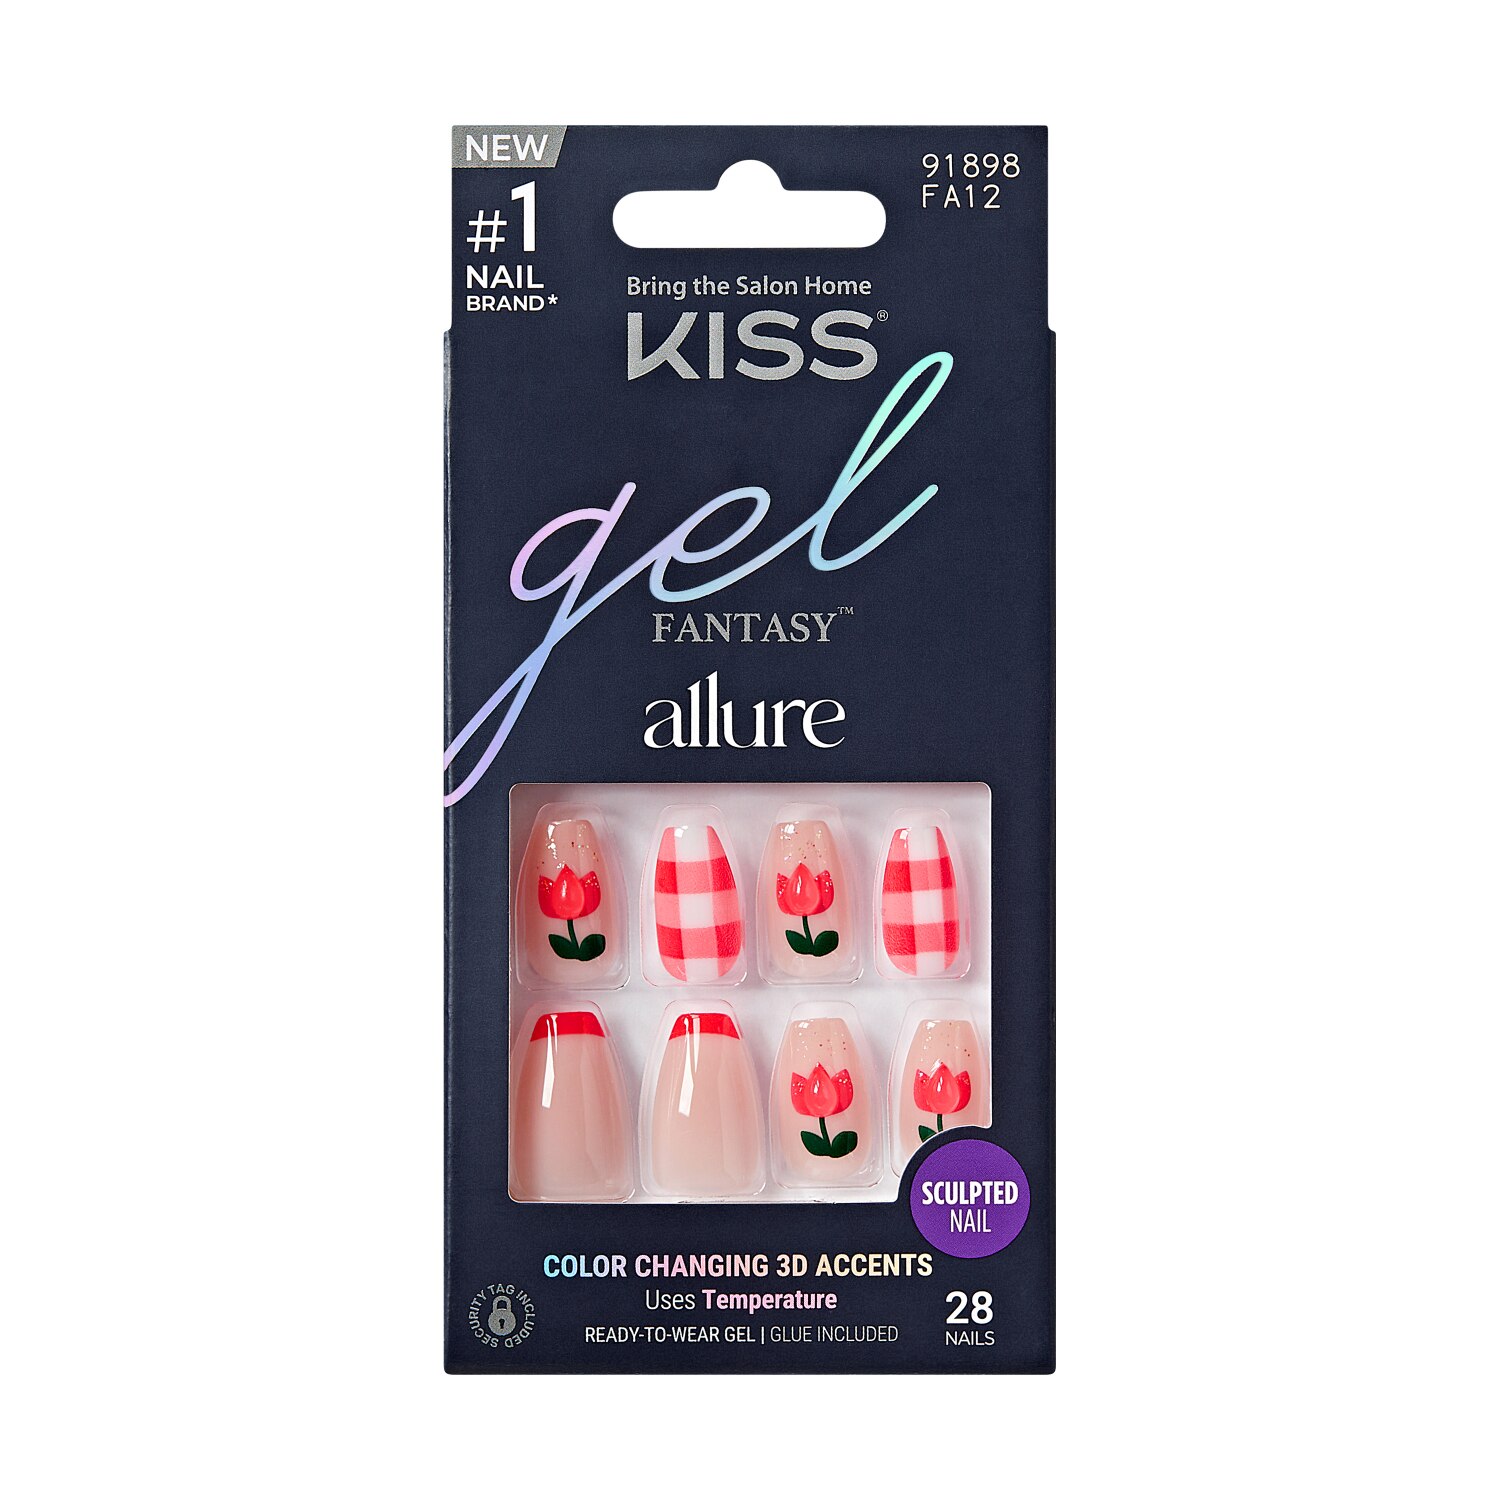 KISS Gel Fantasy Allure Ready-To-Wear Fake Nails, All Urs , CVS